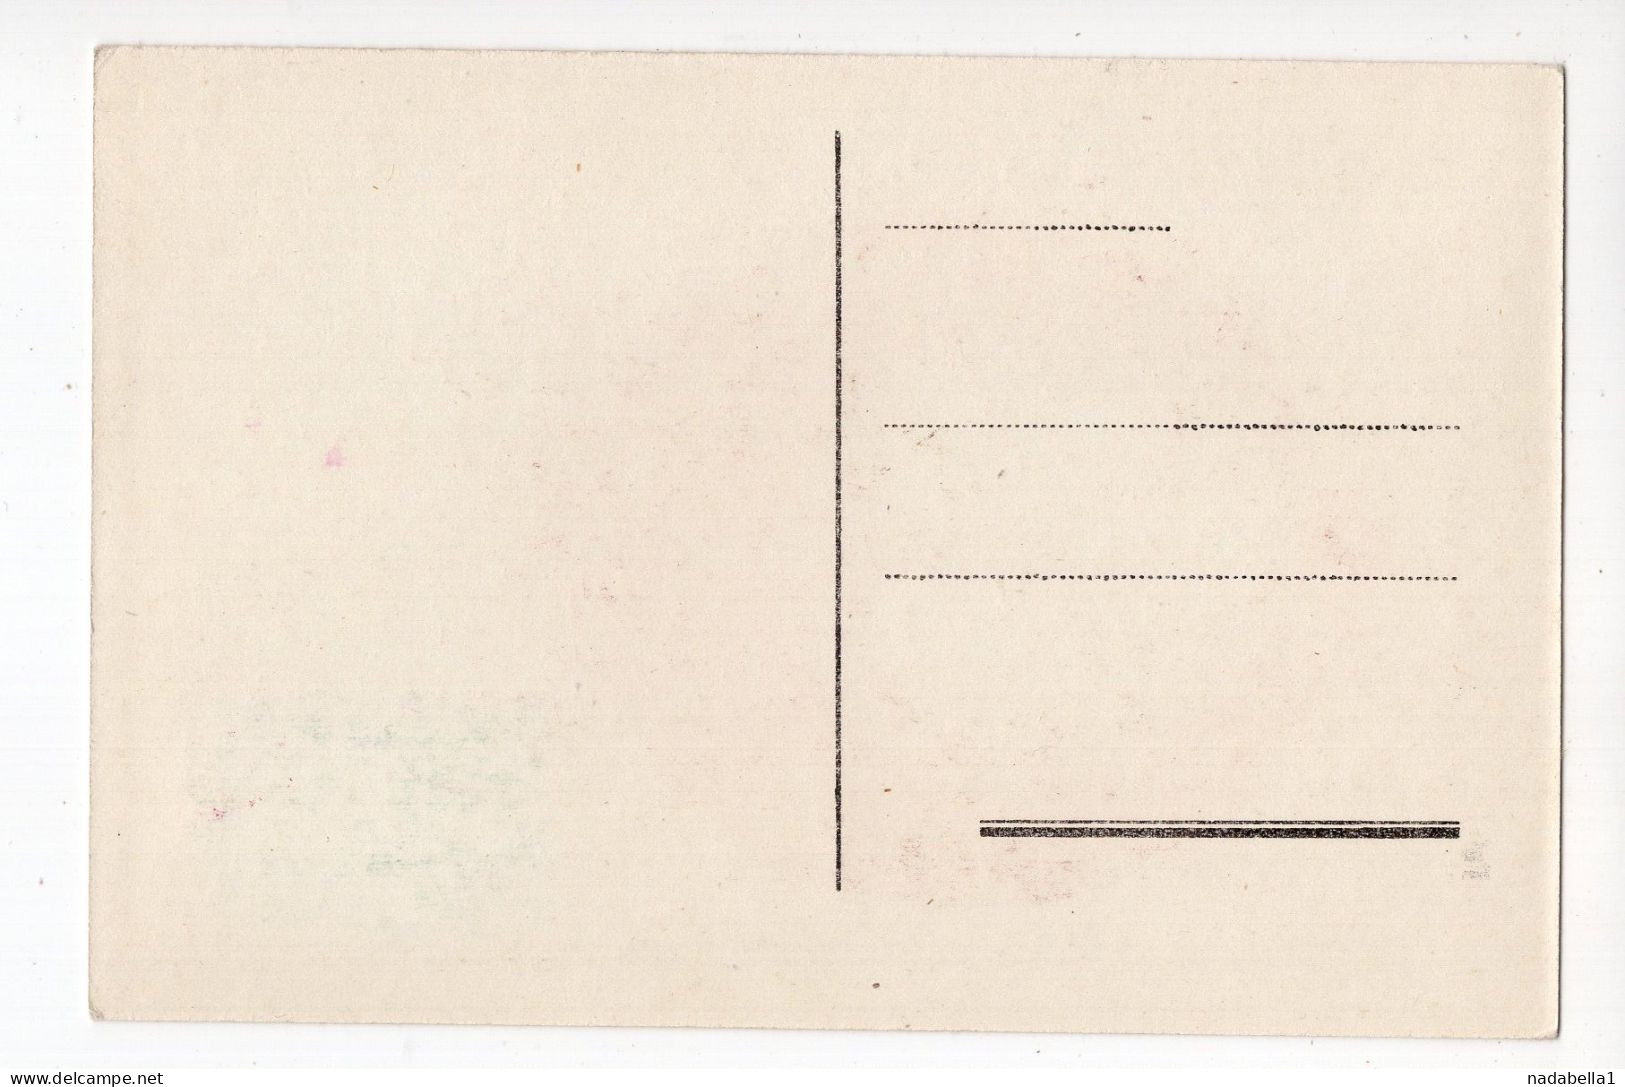 1948. YUGOSLAVIA,BOSNIA,SARAJEVO,FDC,MC,MAXIMUM CARD,29.11.1943-1948,5 YEARS OF FNRJ,COAT OF ARMS - Maximum Cards